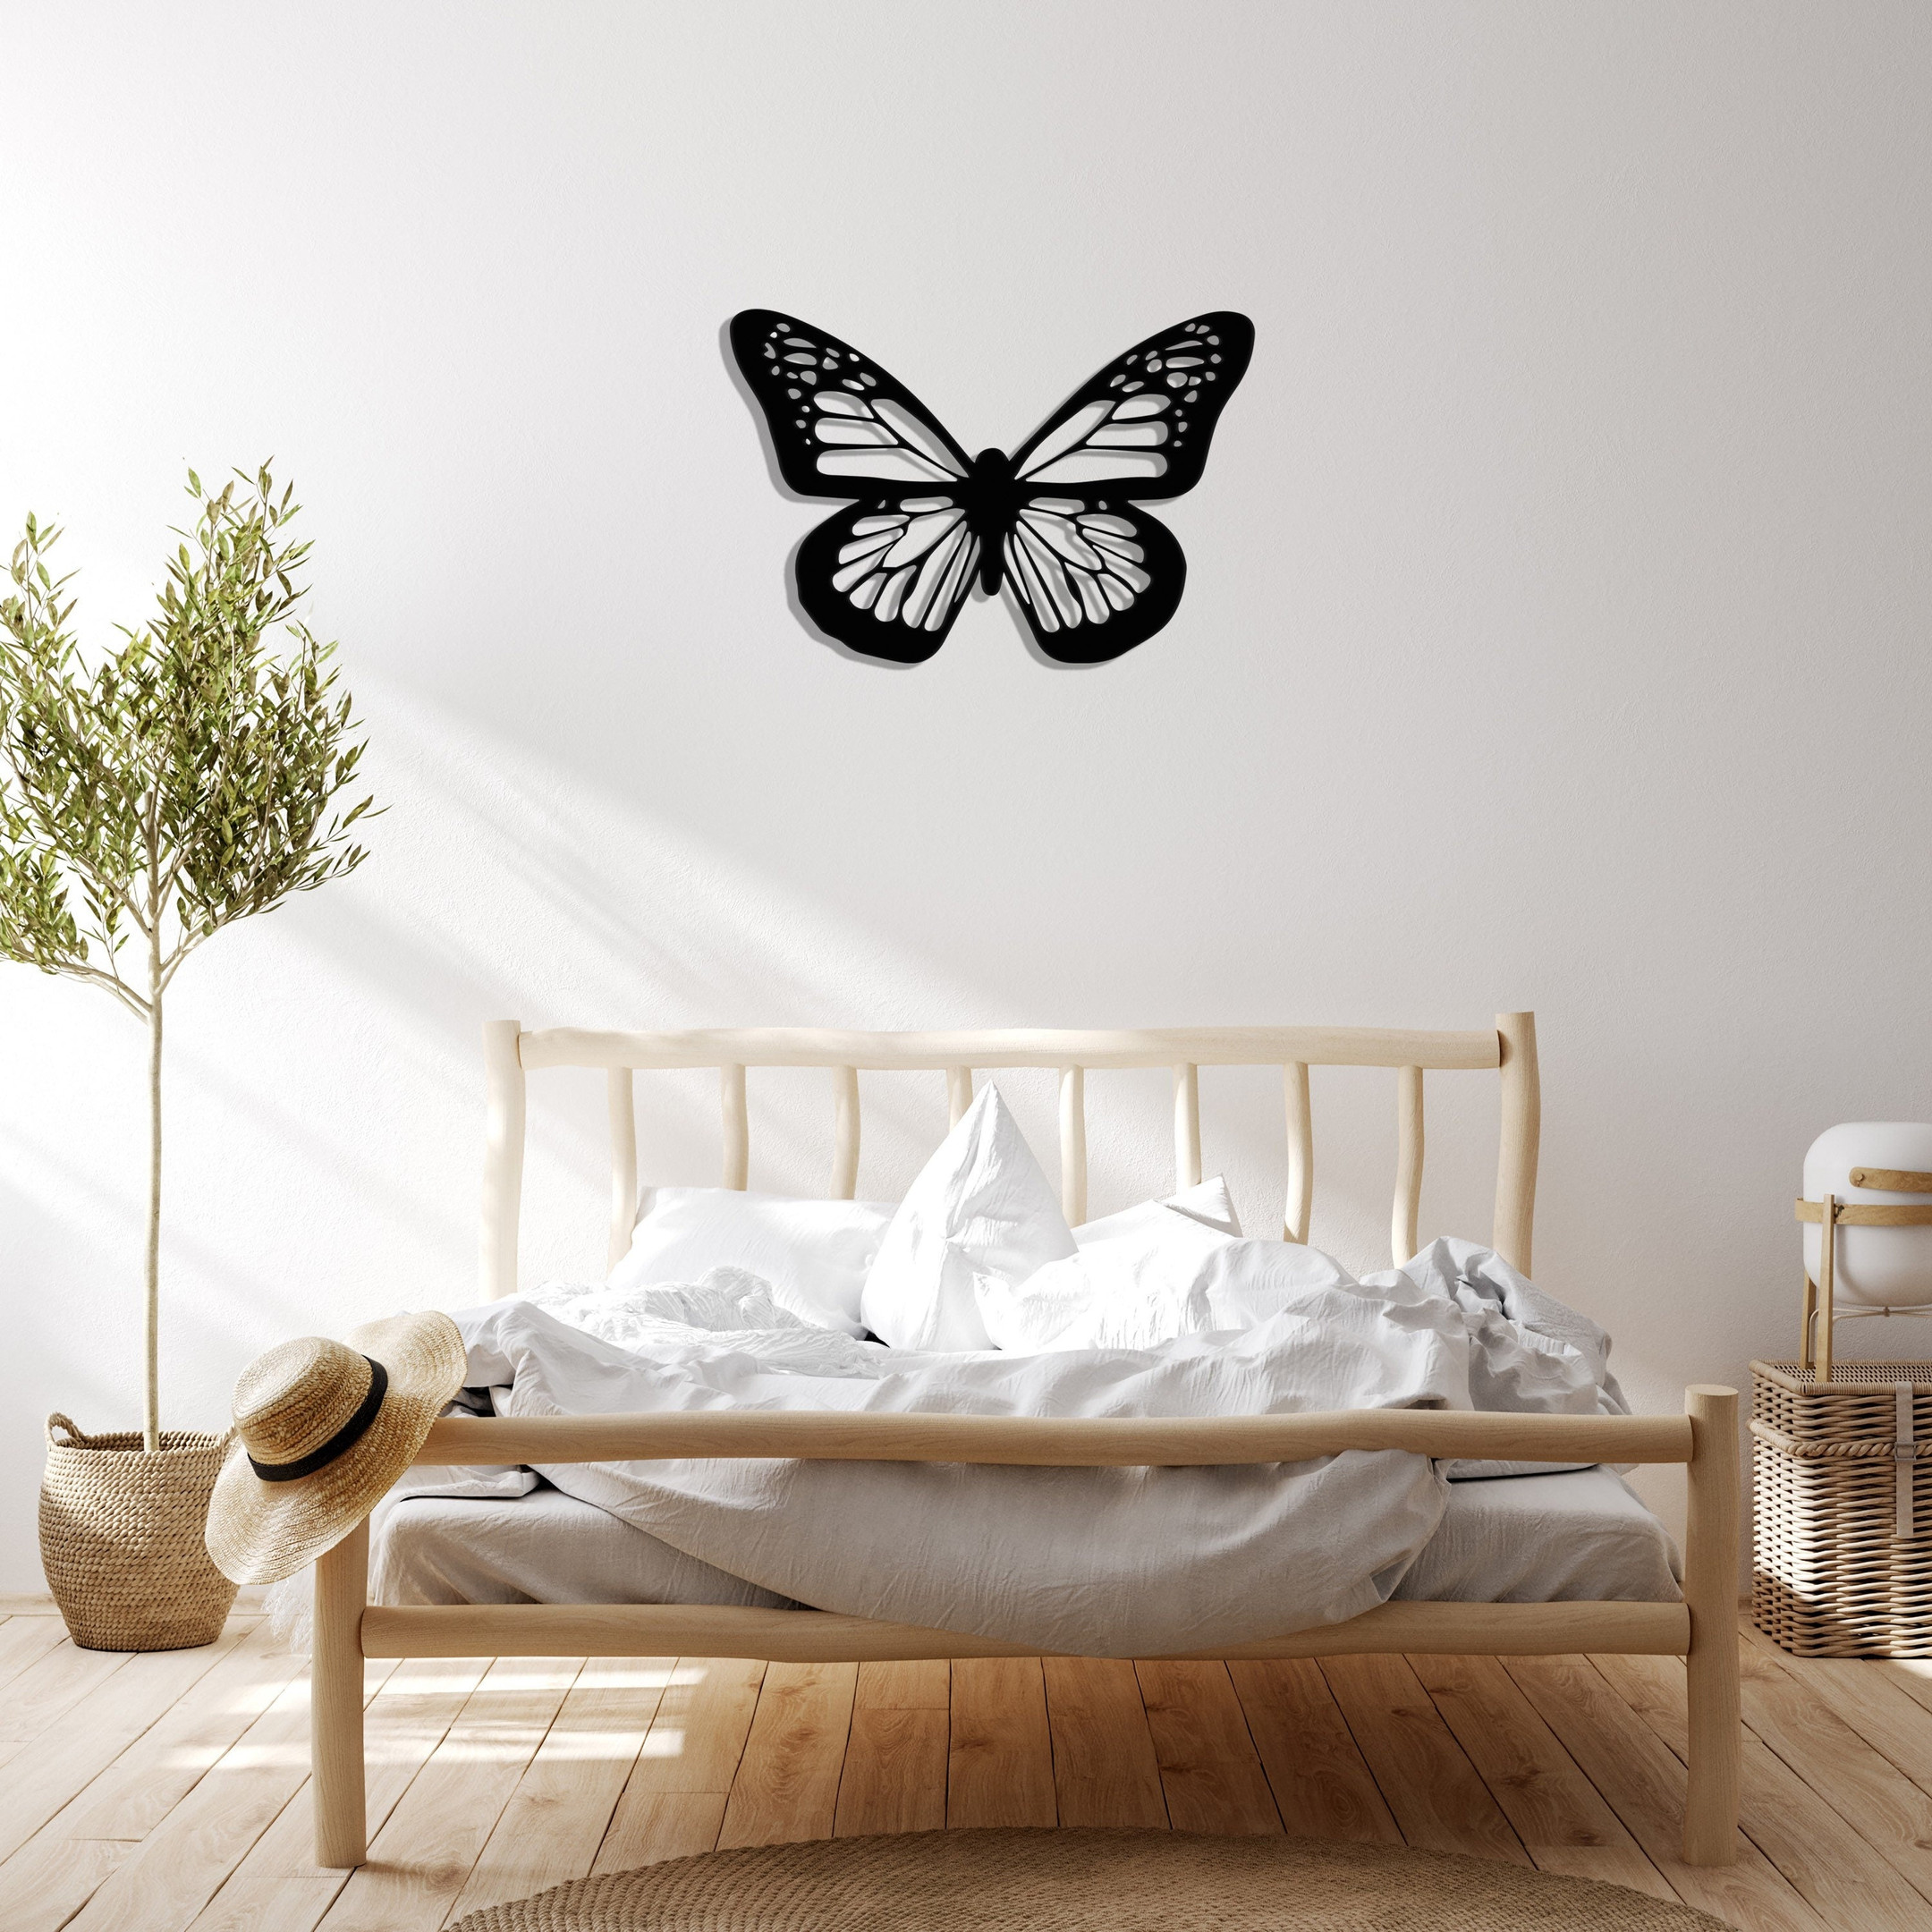 Butterfly Metal Wall Art, Butterfly Wings Wall Decor, Housewarming Gift, Office Wall Decor, Living Room Decor, Animal Art, Metal Laser Cut Metal Signs Custom Gift Ideas